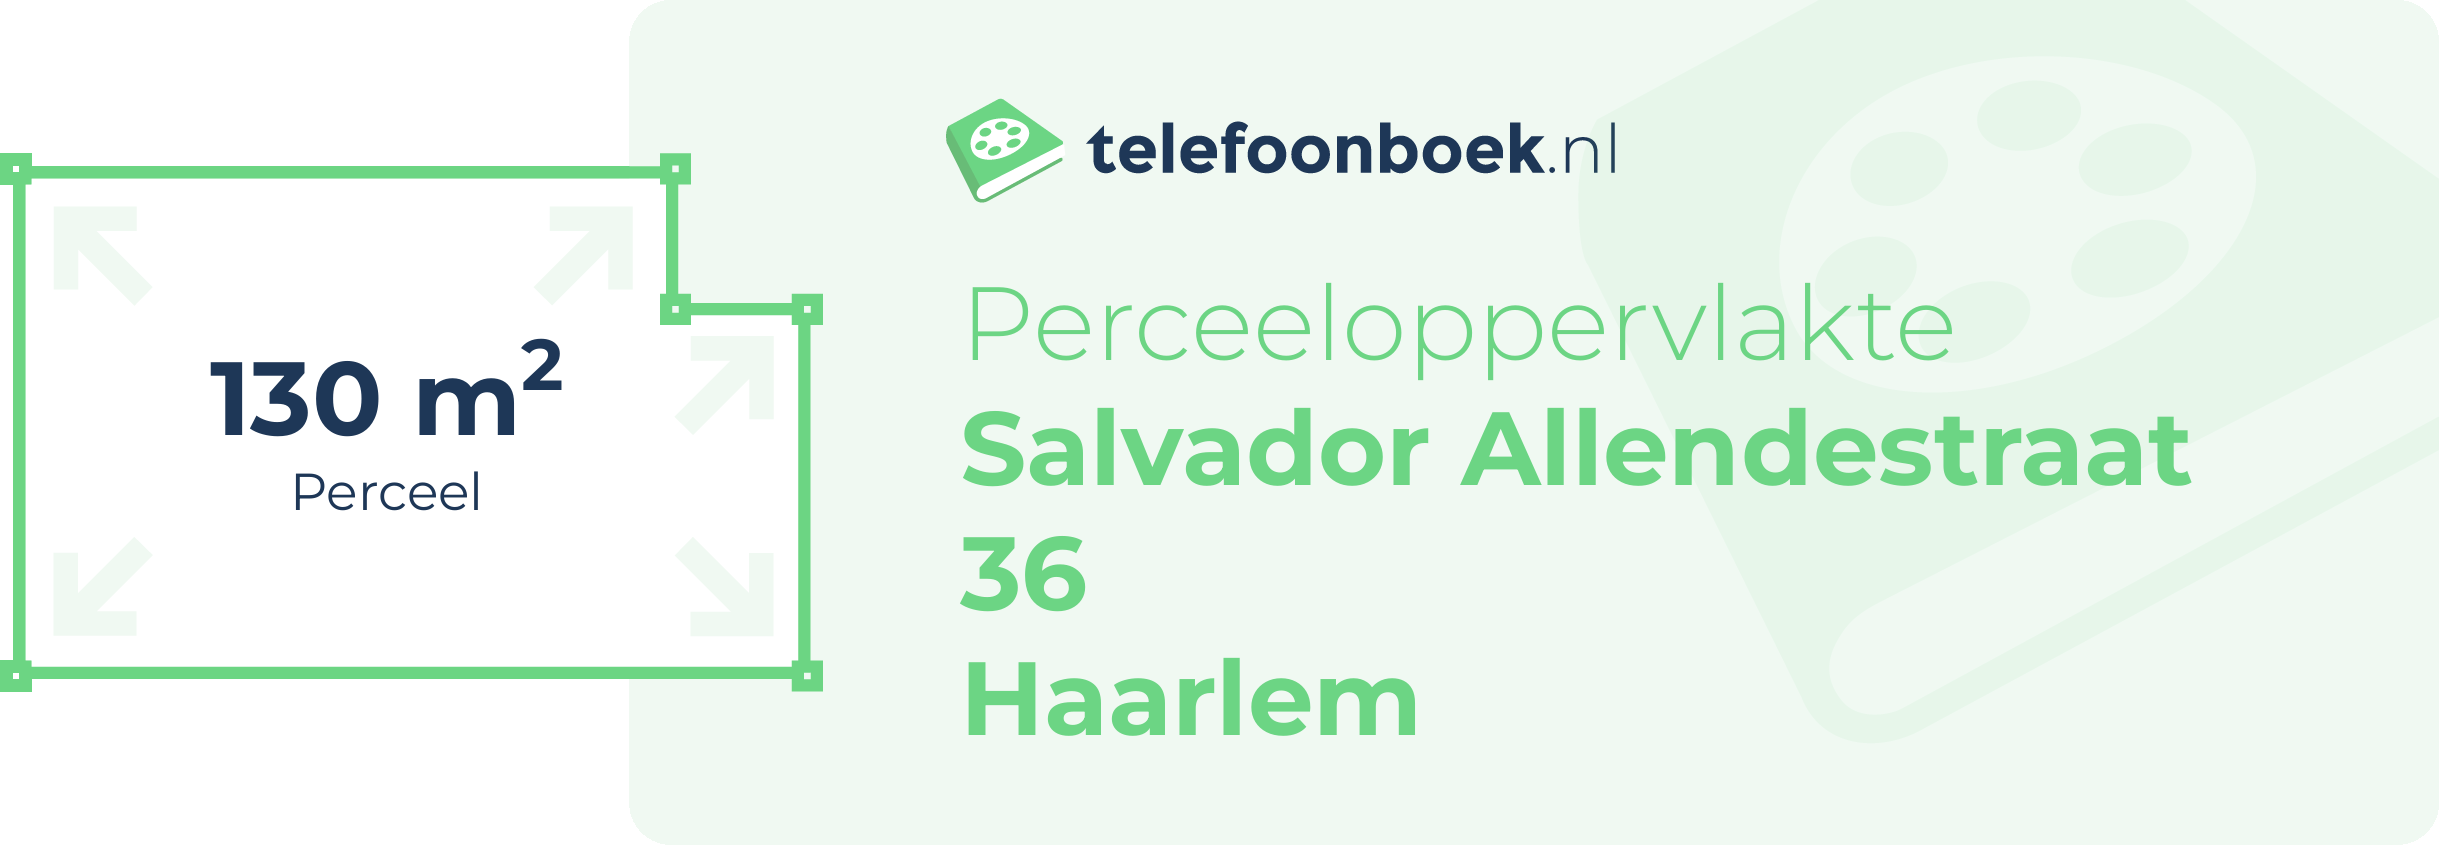 Perceeloppervlakte Salvador Allendestraat 36 Haarlem